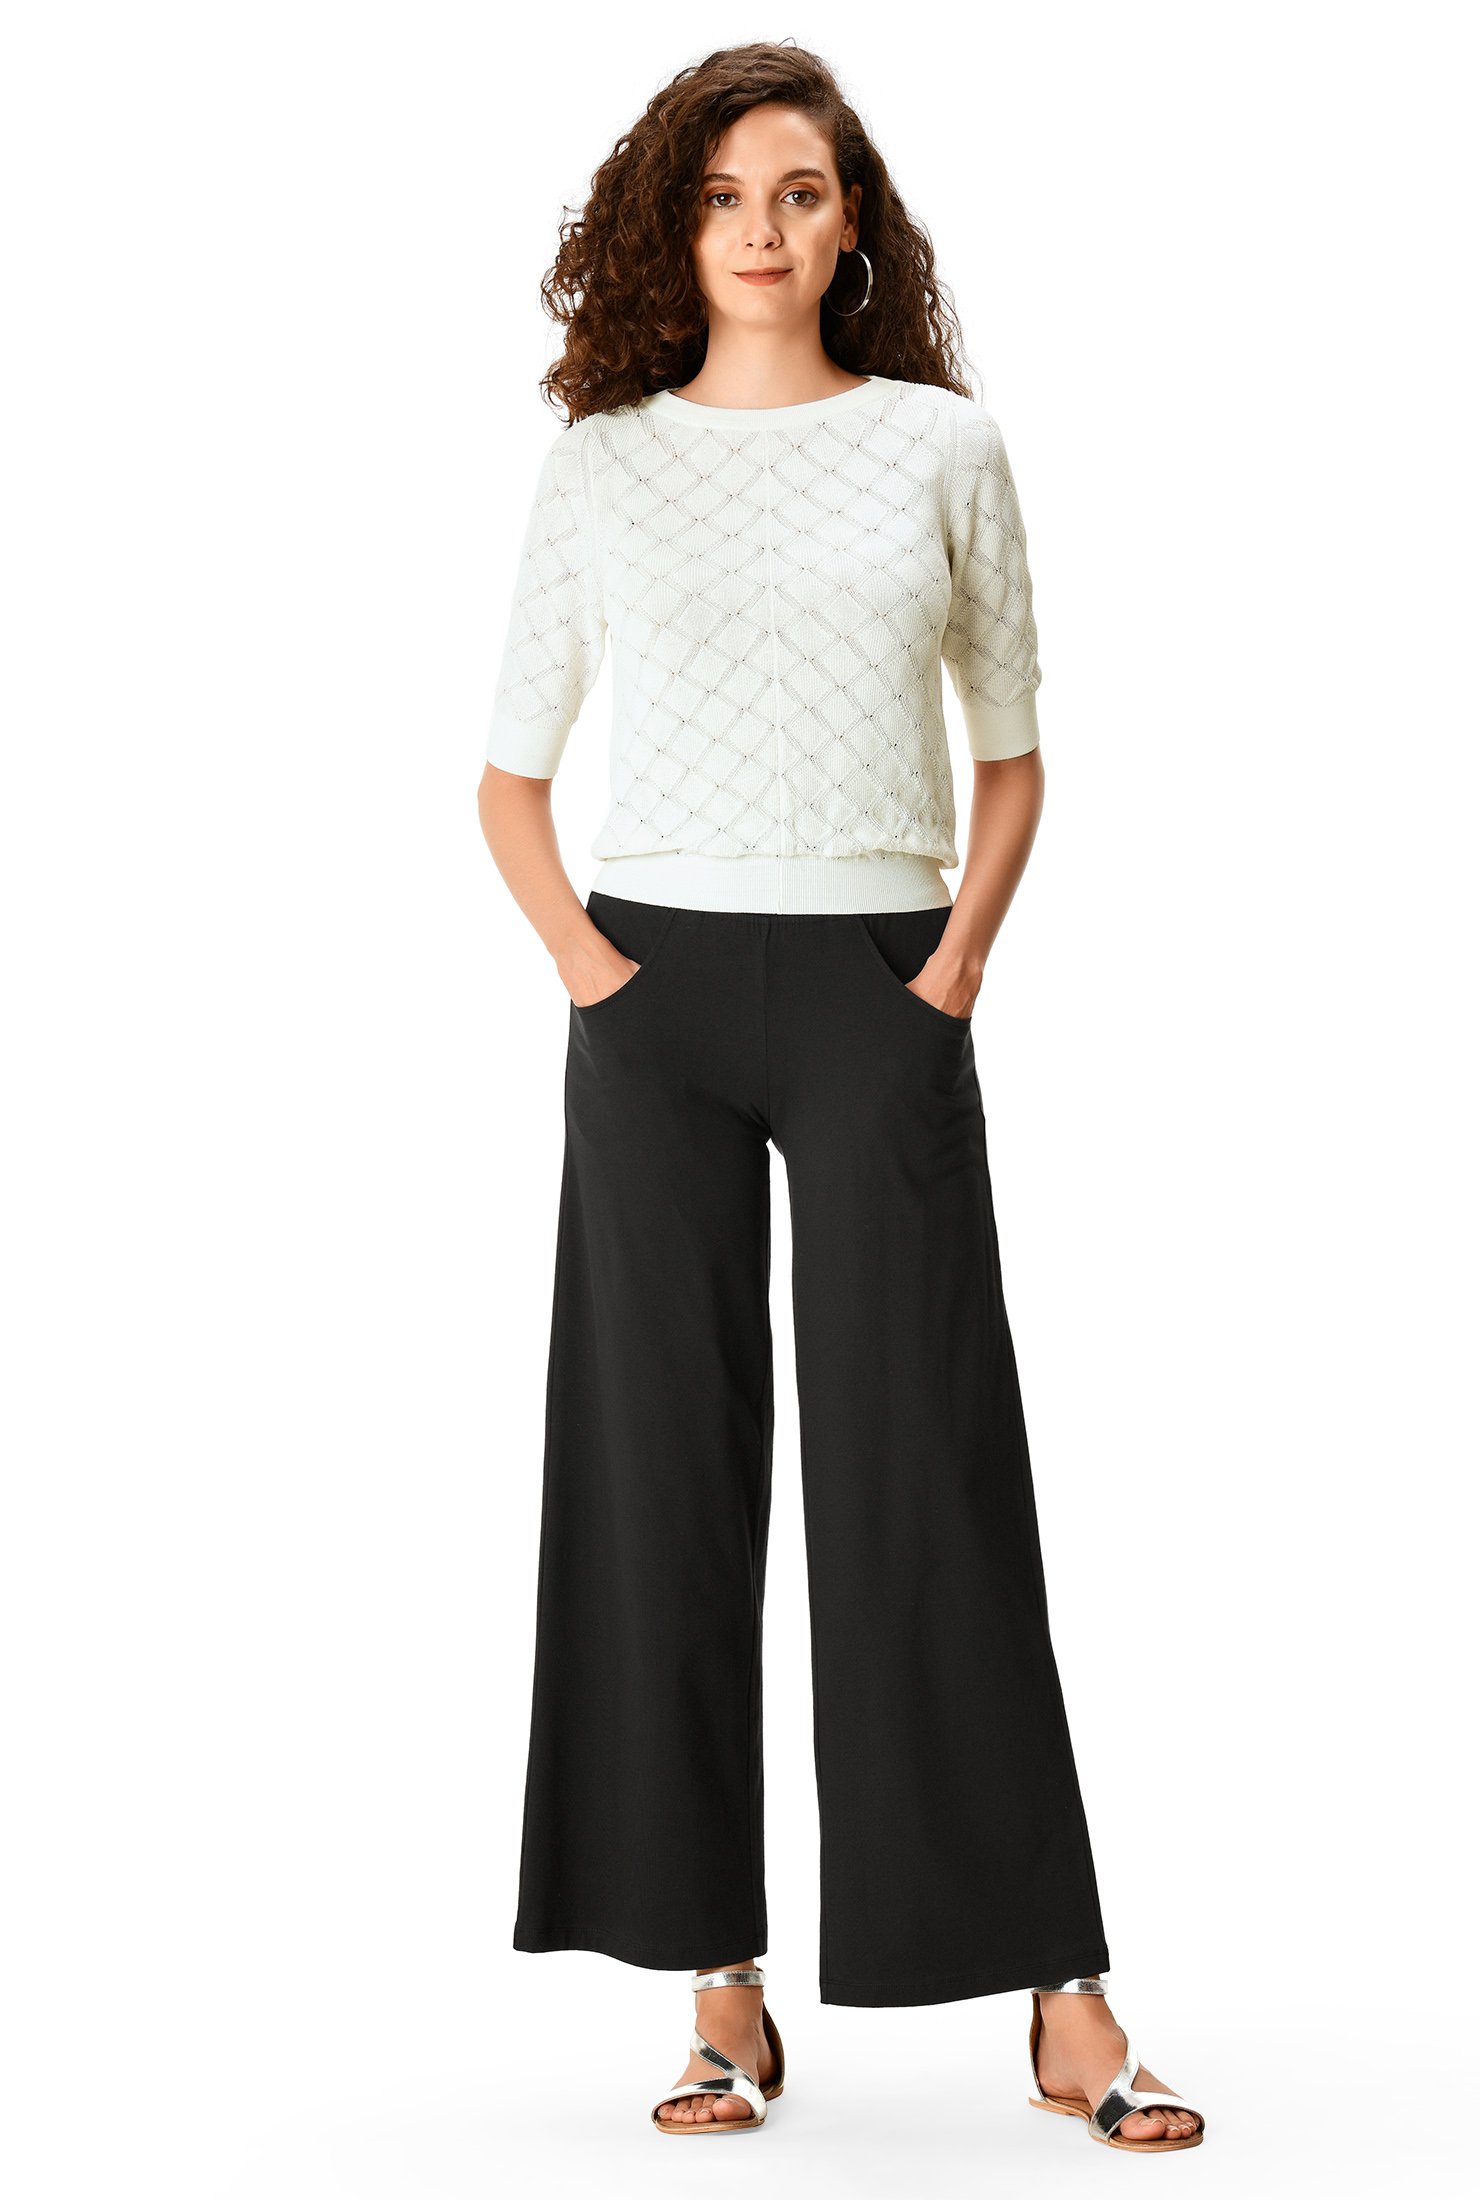 Shop Light sweater knit top and cotton jersey knit pants set | eShakti